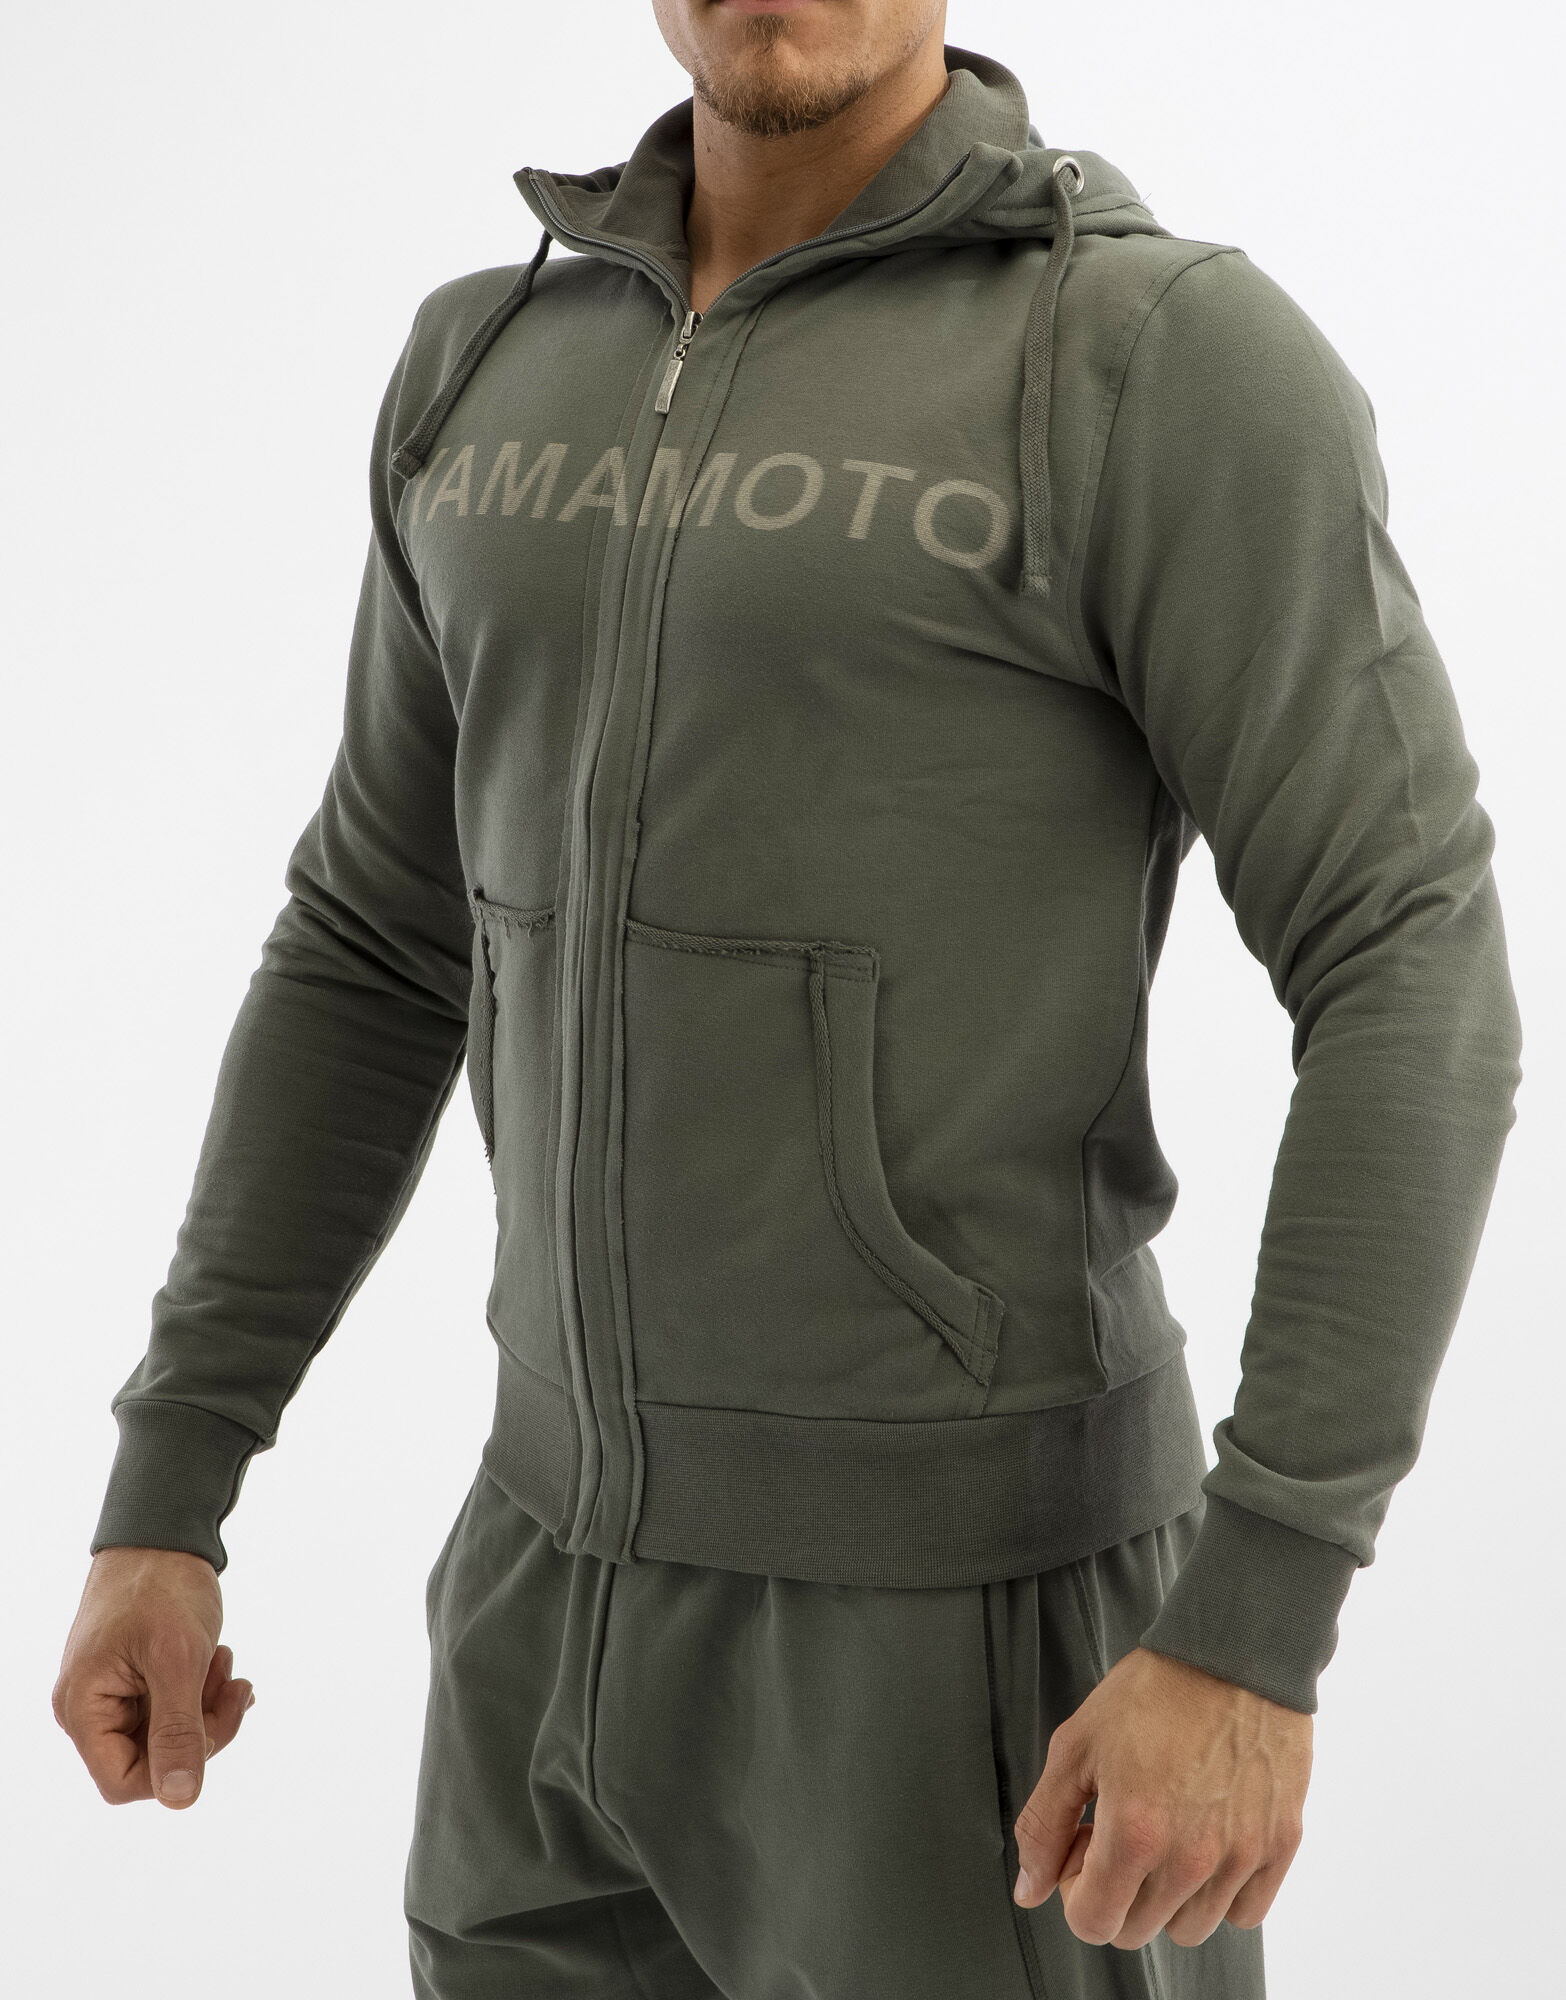 YAMAMOTO OUTFIT Sweatshirt Zip Colore: Grigio M